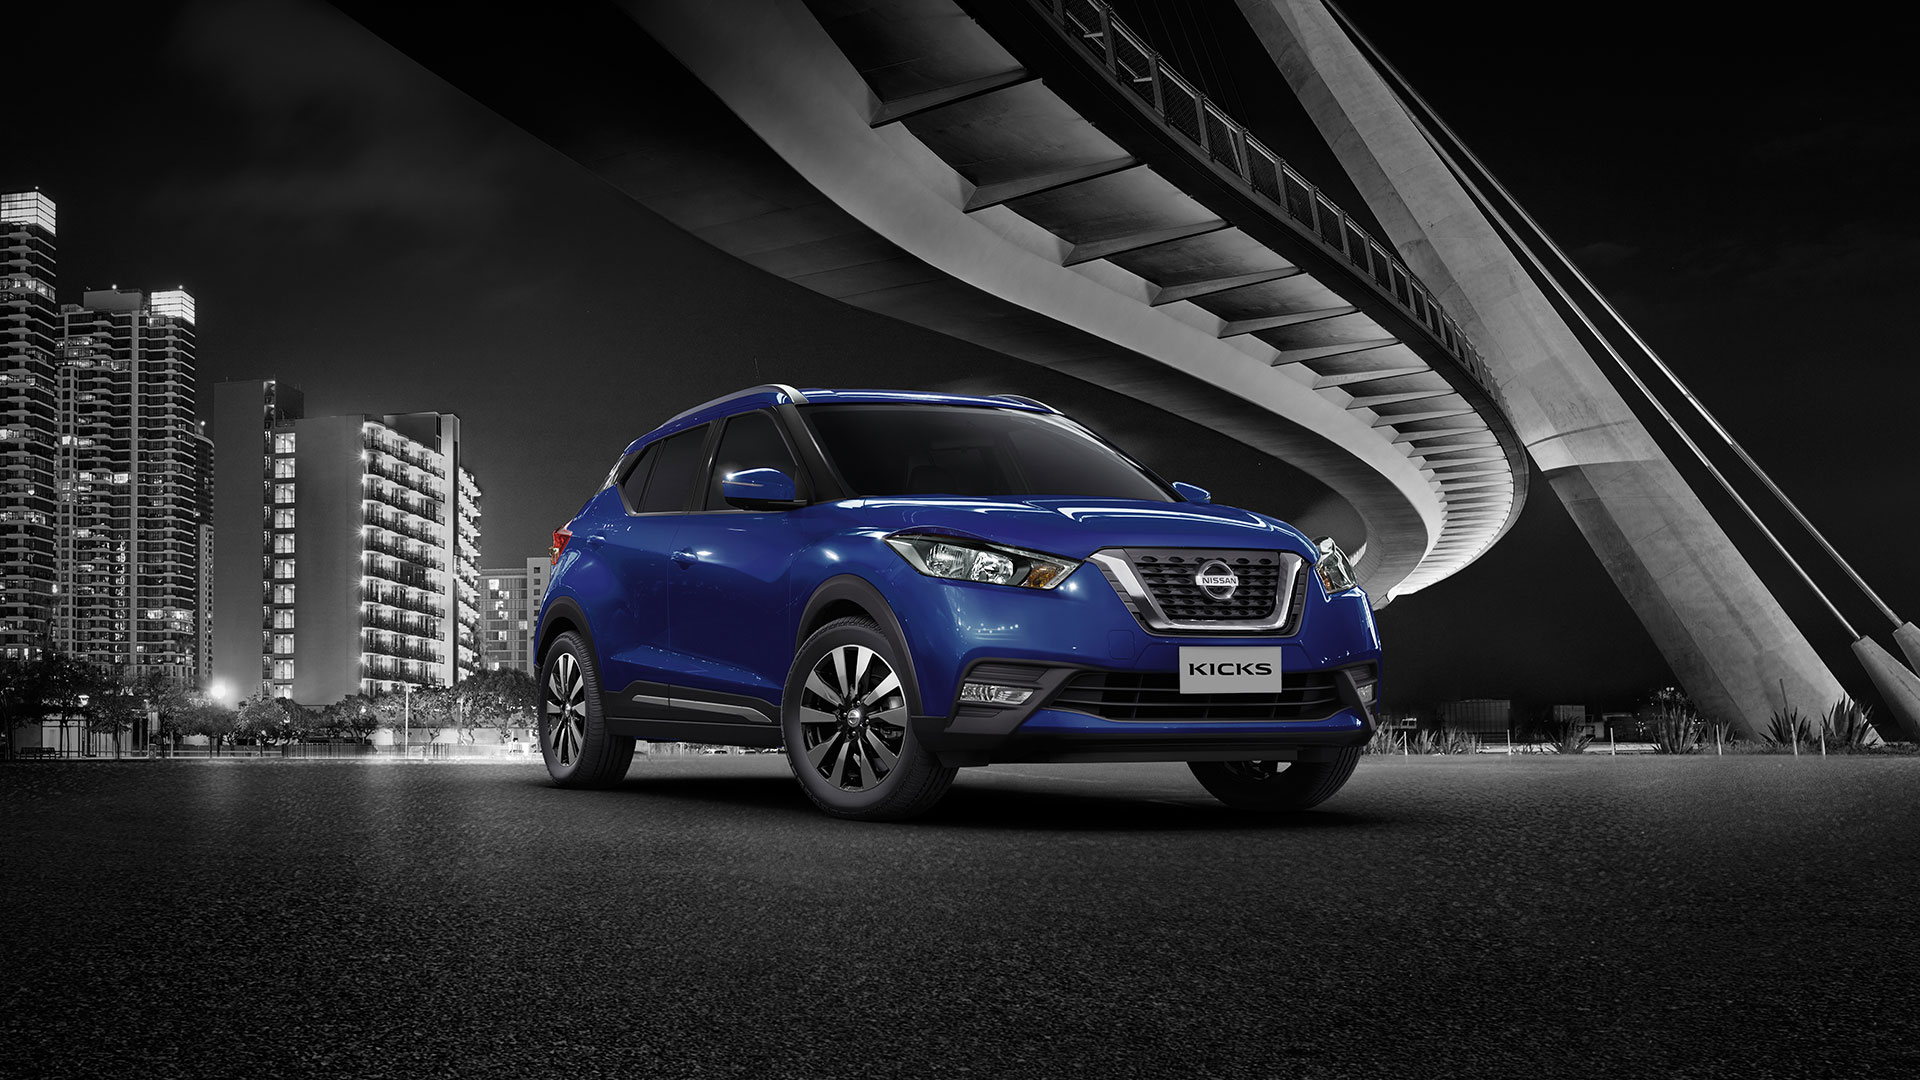 Nissan_Advertising